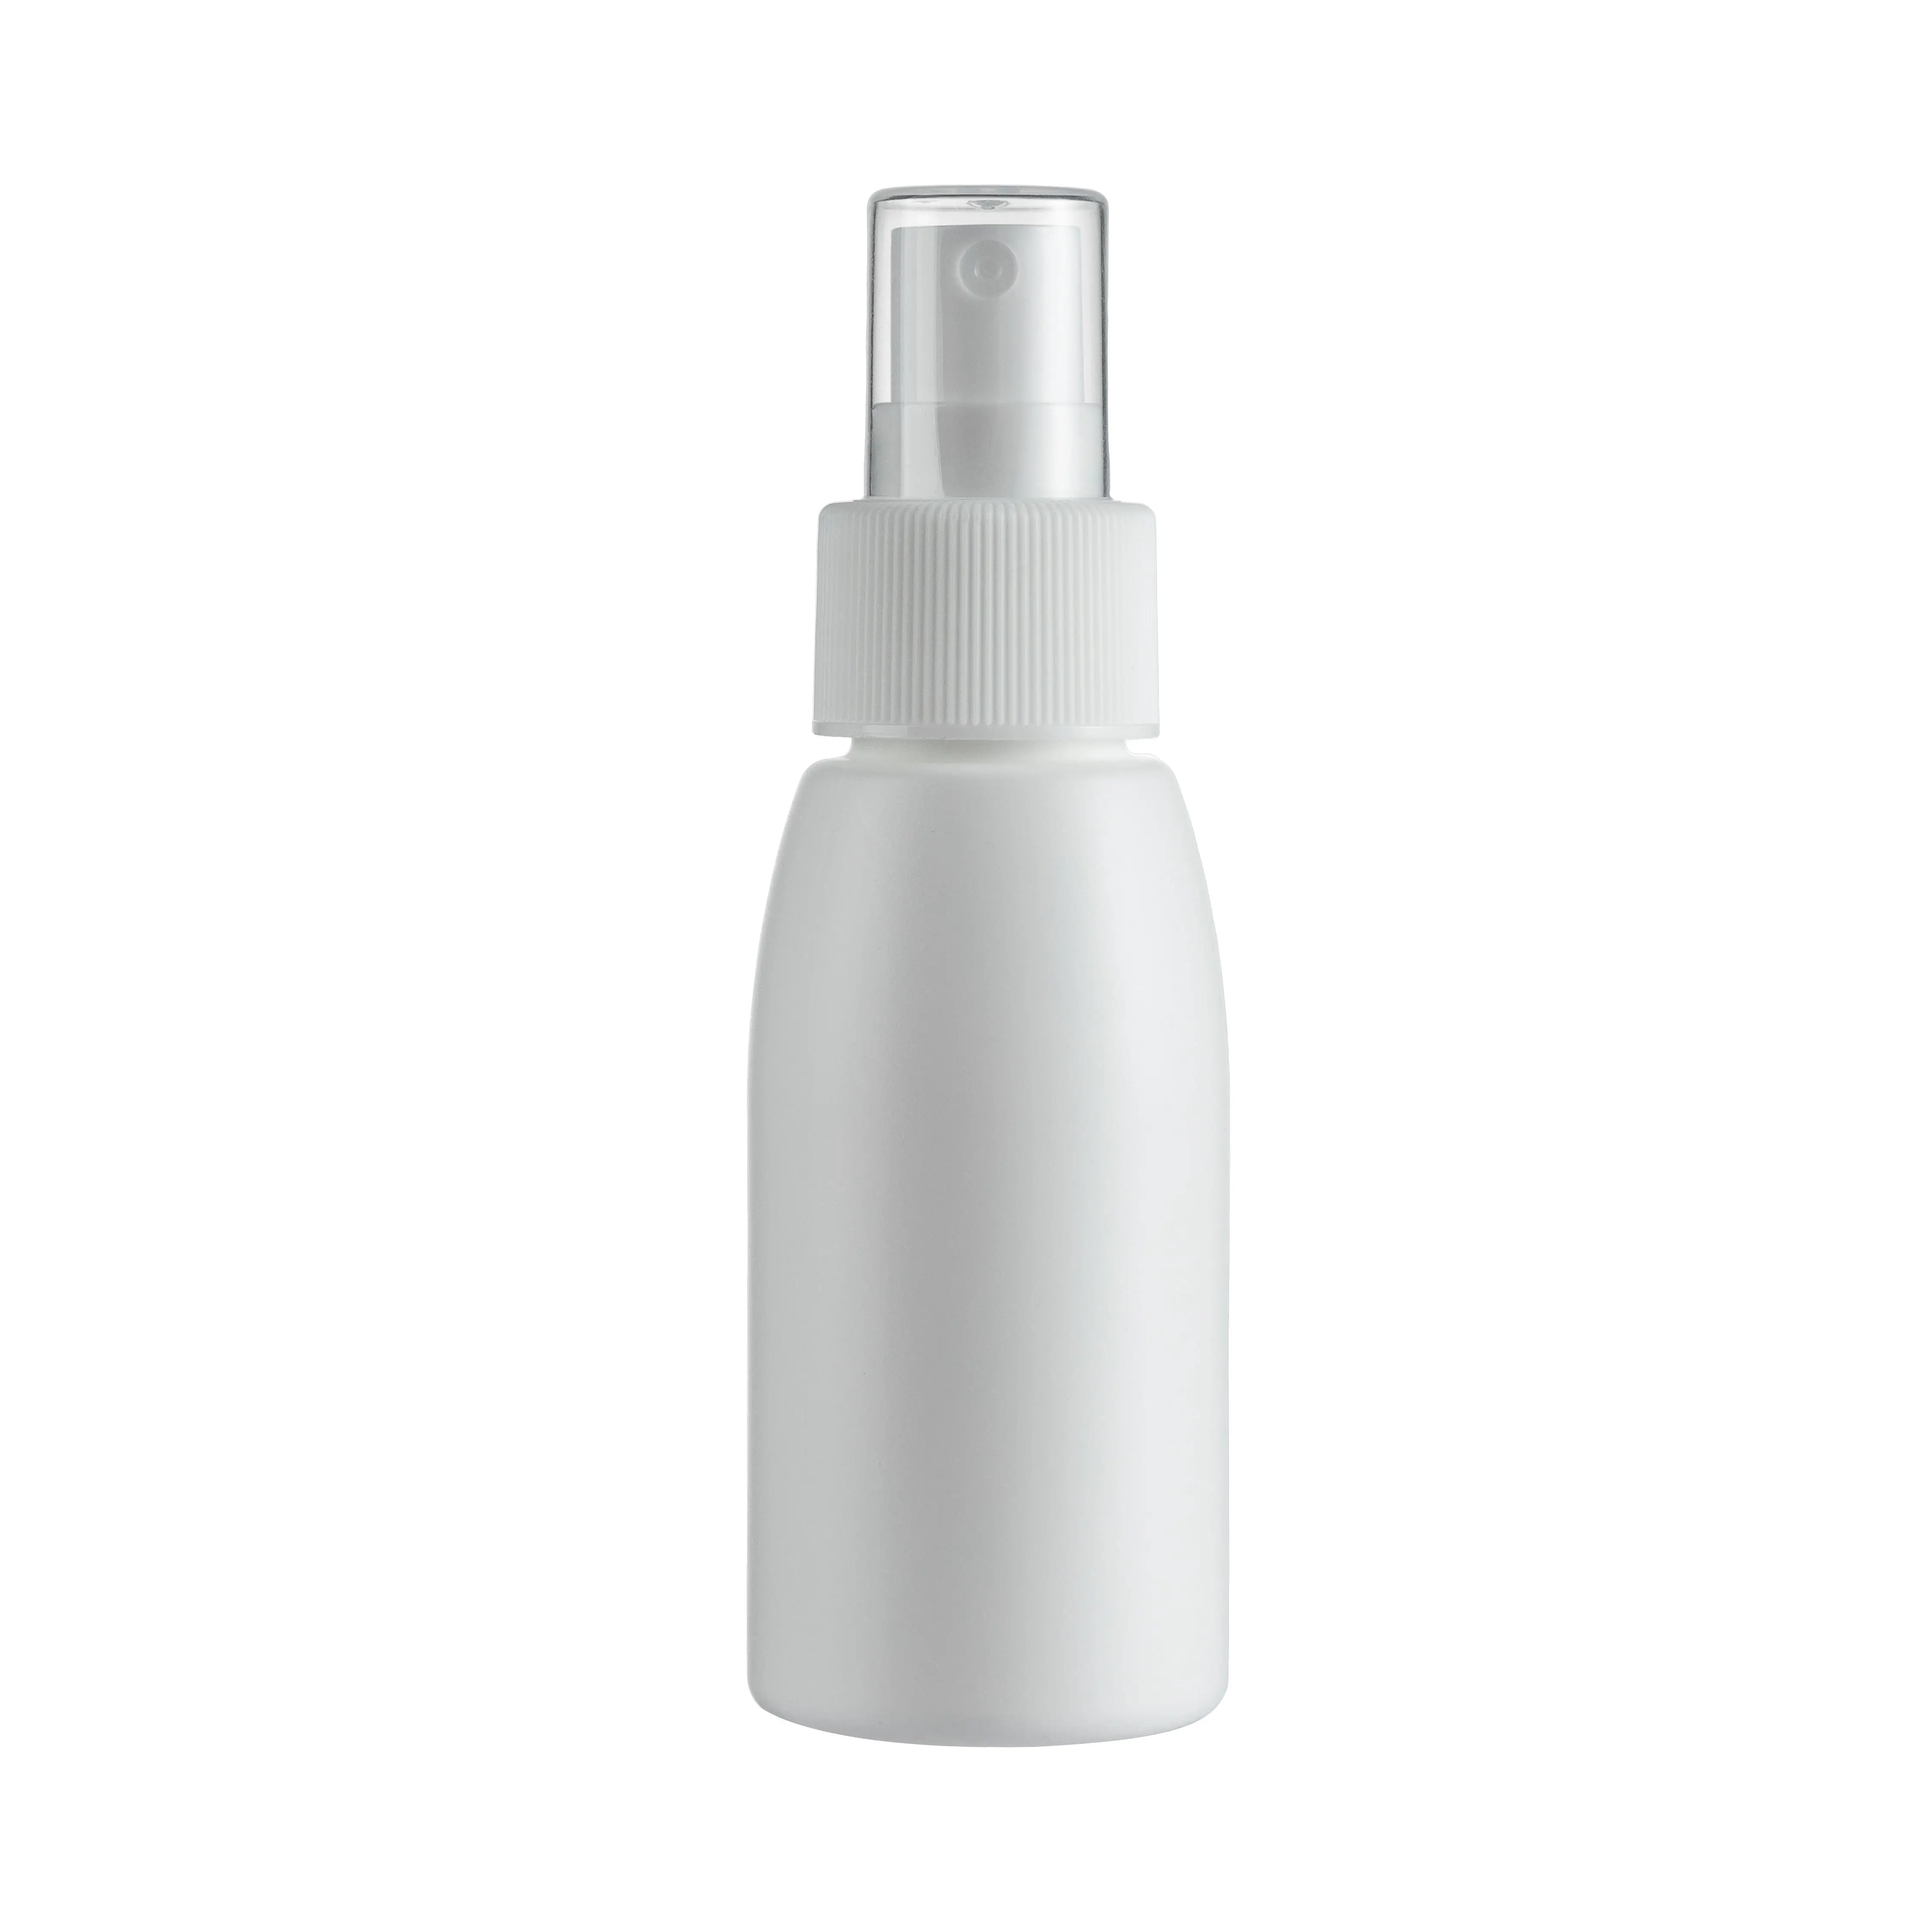 HDPE Bottle Round large capacity Plastic Products Mist Sprayer System Bottle Spray